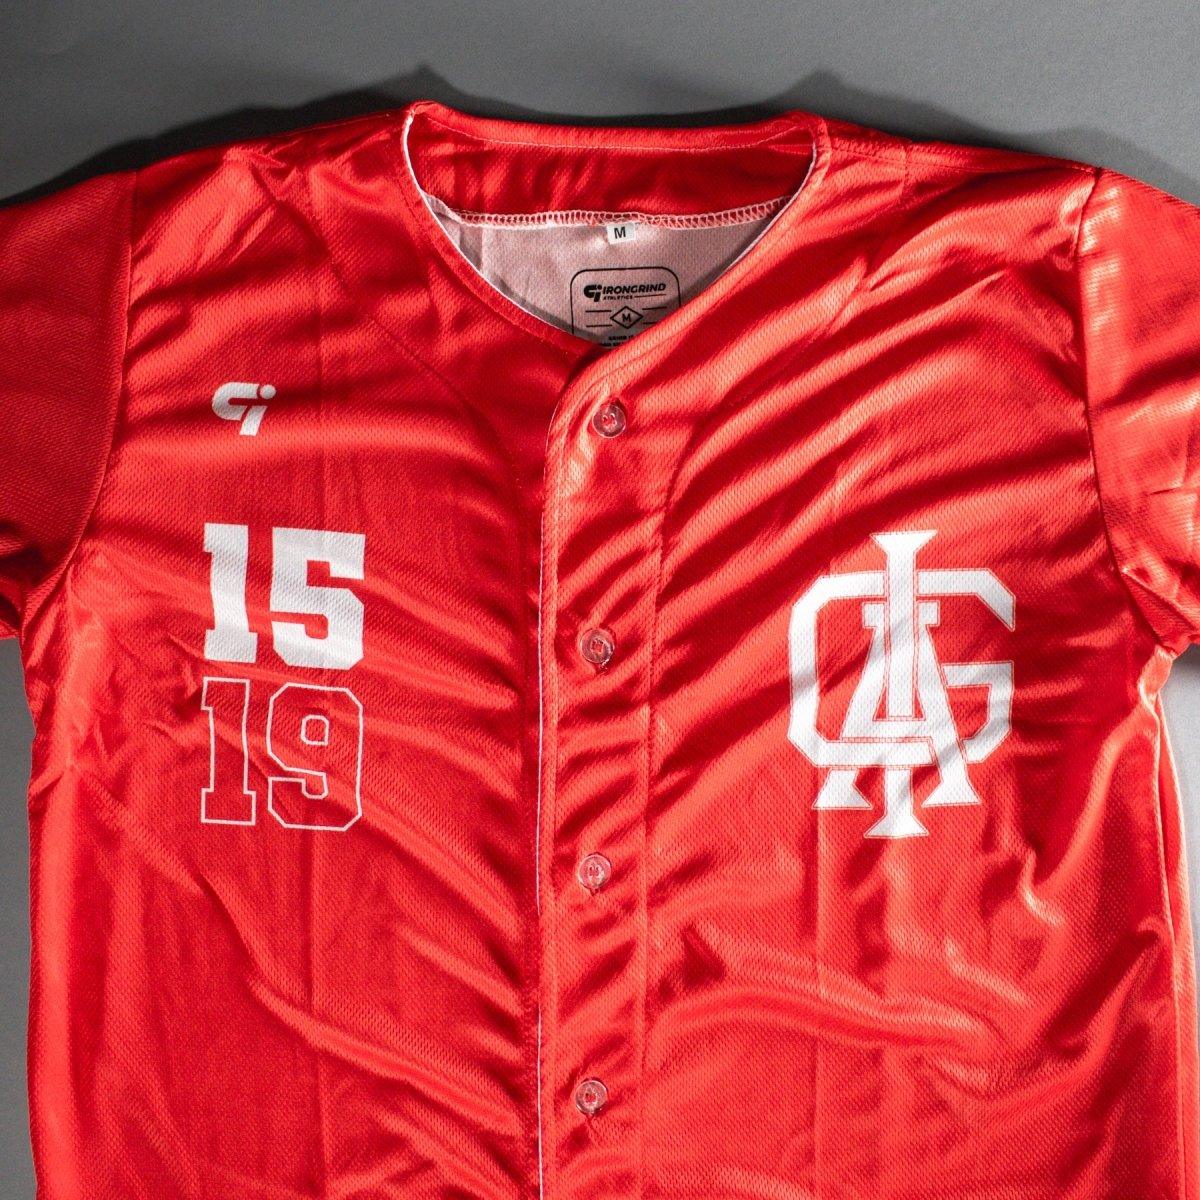 Incarnate Baseball Jersey - Red - IronGrind Athletics - activewear - gymshark - alphalete